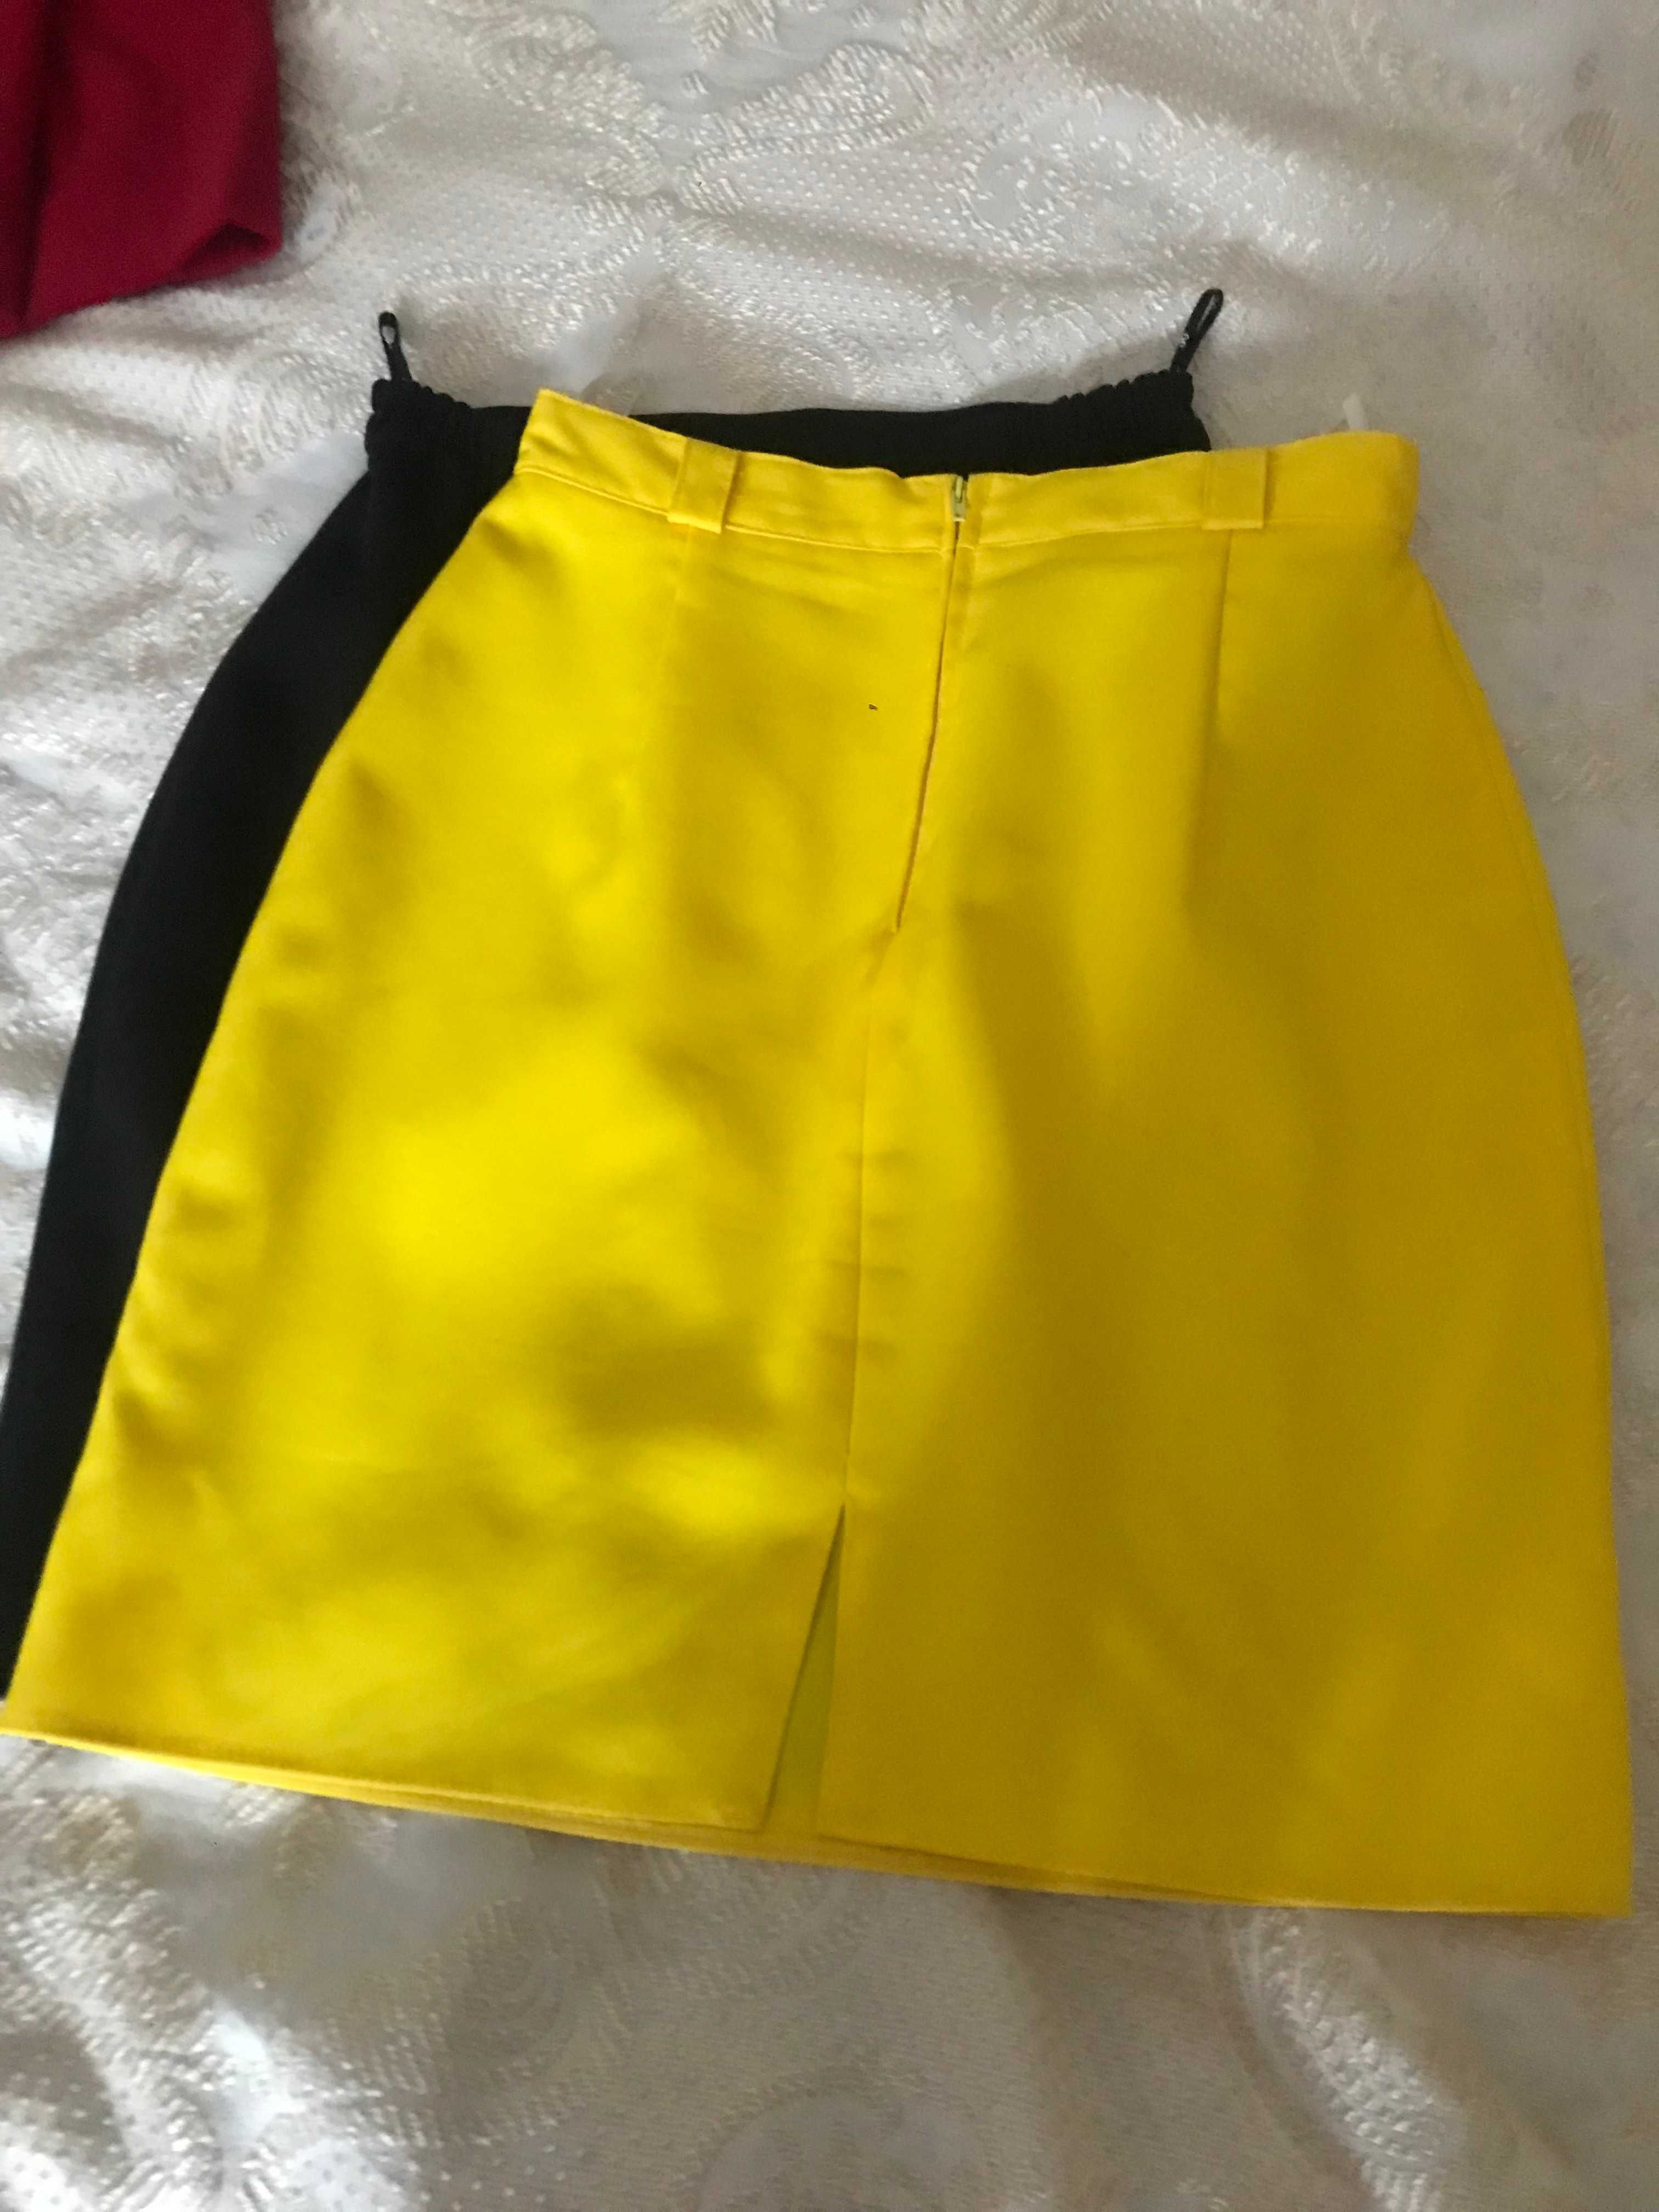 Piękna żółta spódniczka S.  LUX !!!